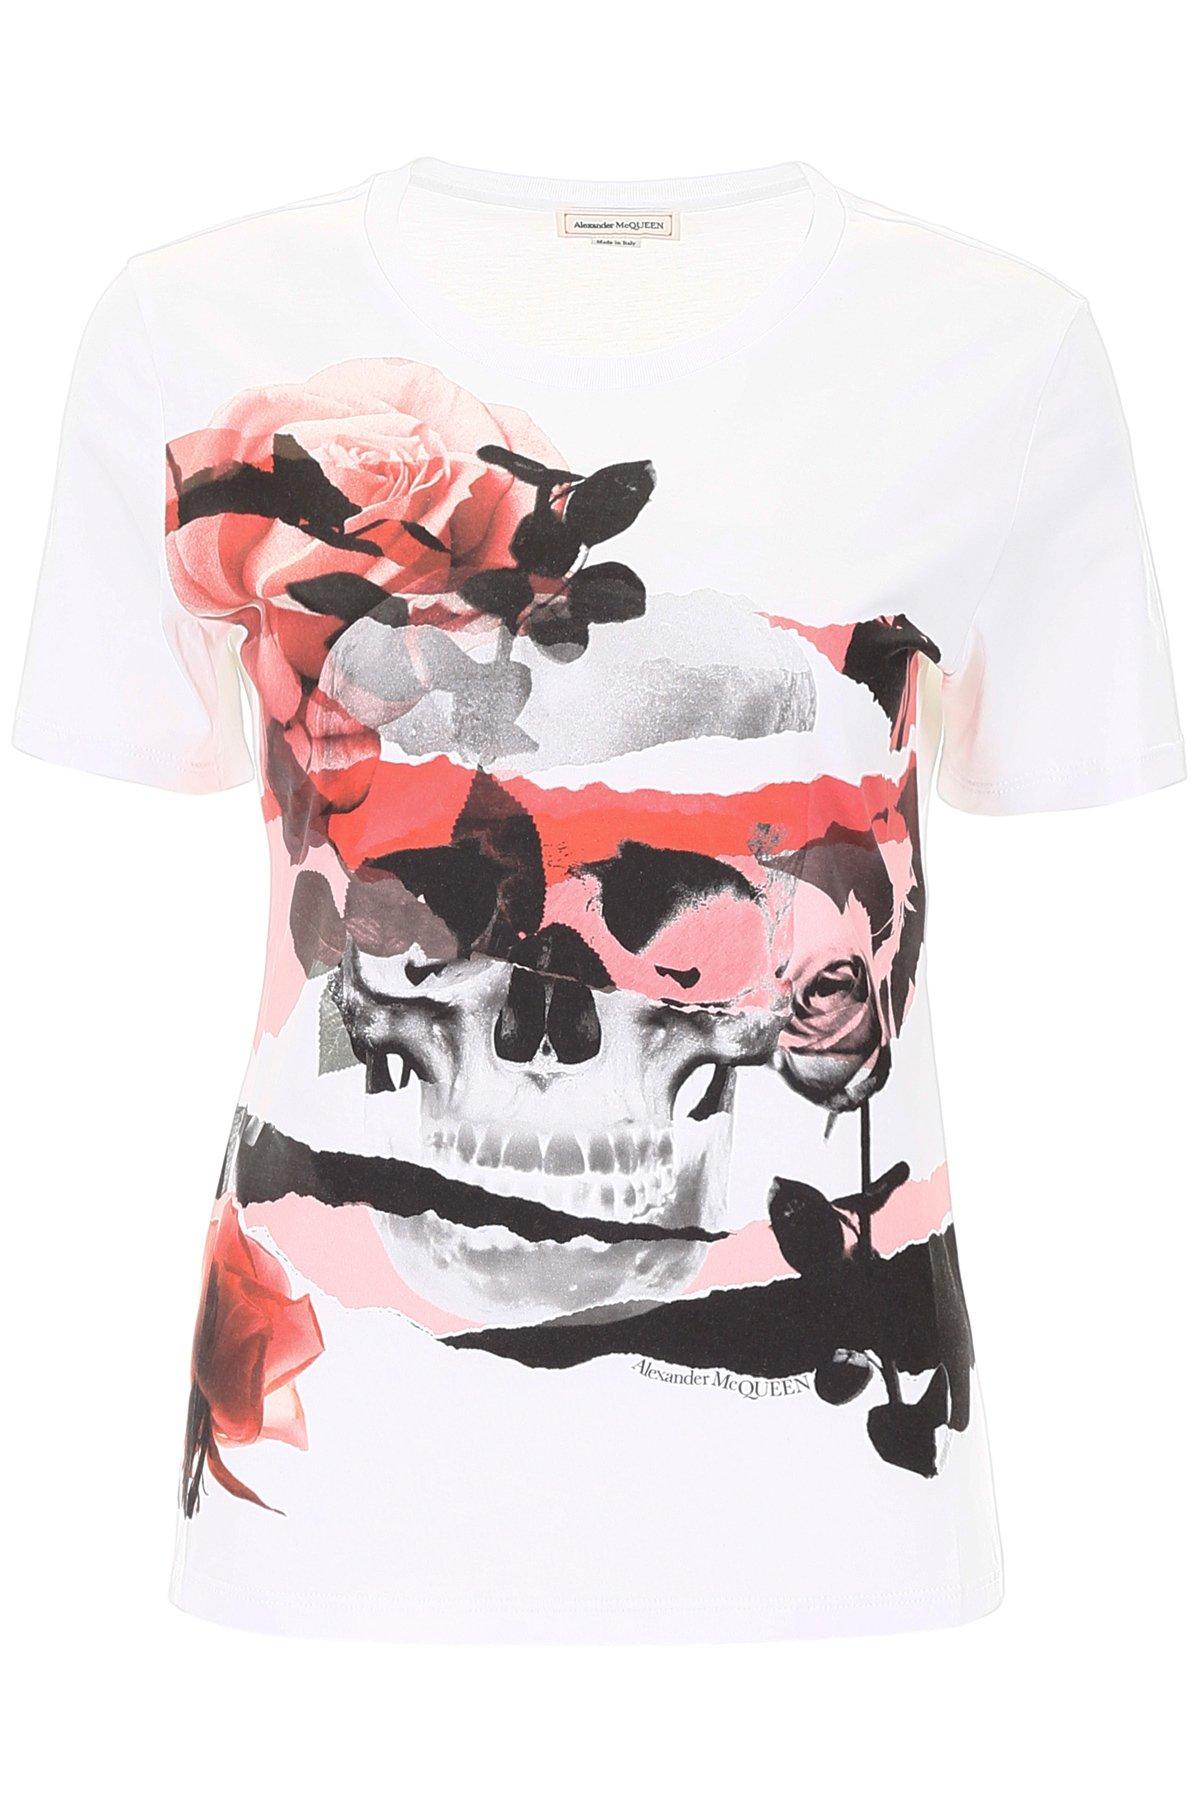 Alexander McQueen Cotton Graphic Printed T-shirt in White - Lyst